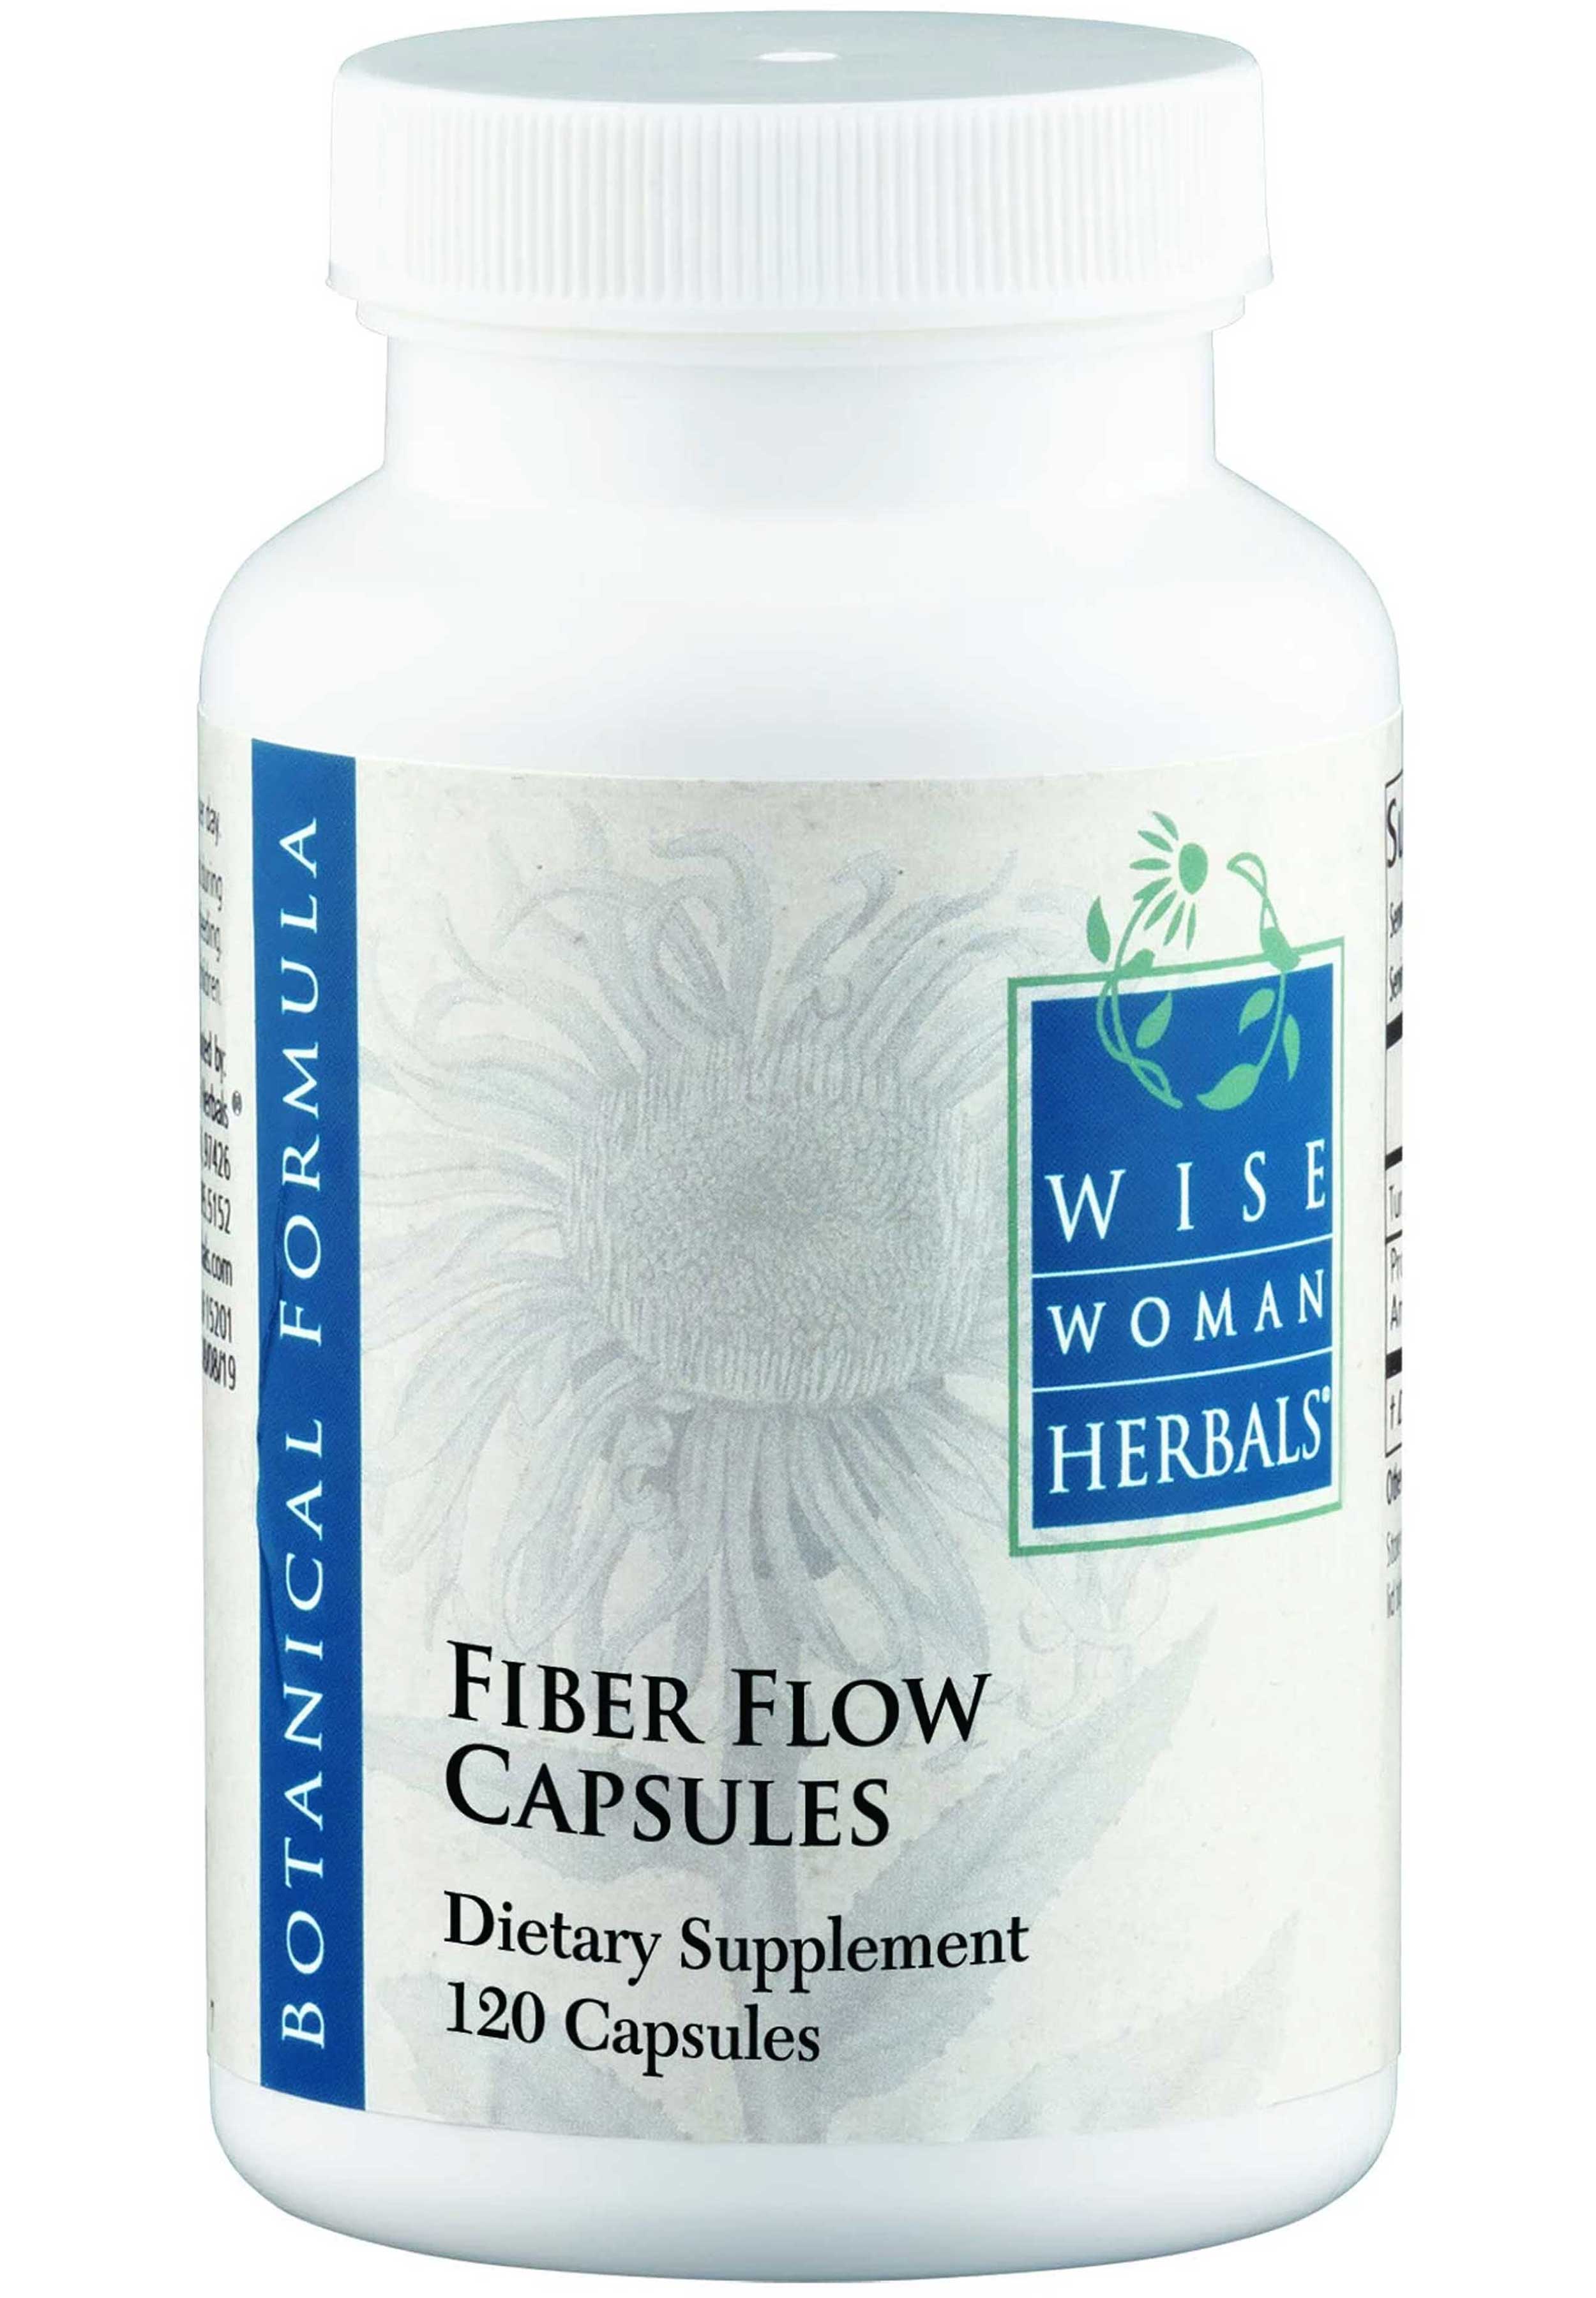 Wise Woman Herbals Fiber Flow Capsules